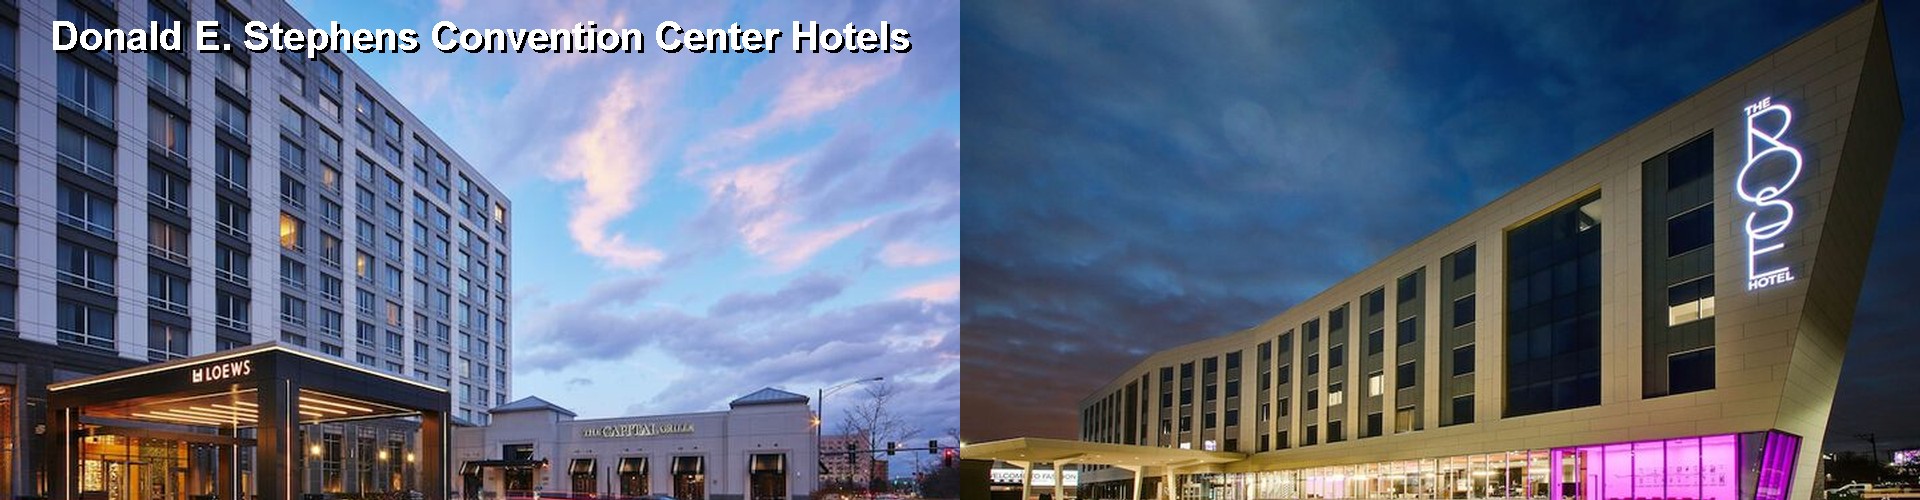 5 Best Hotels near Donald E. Stephens Convention Center